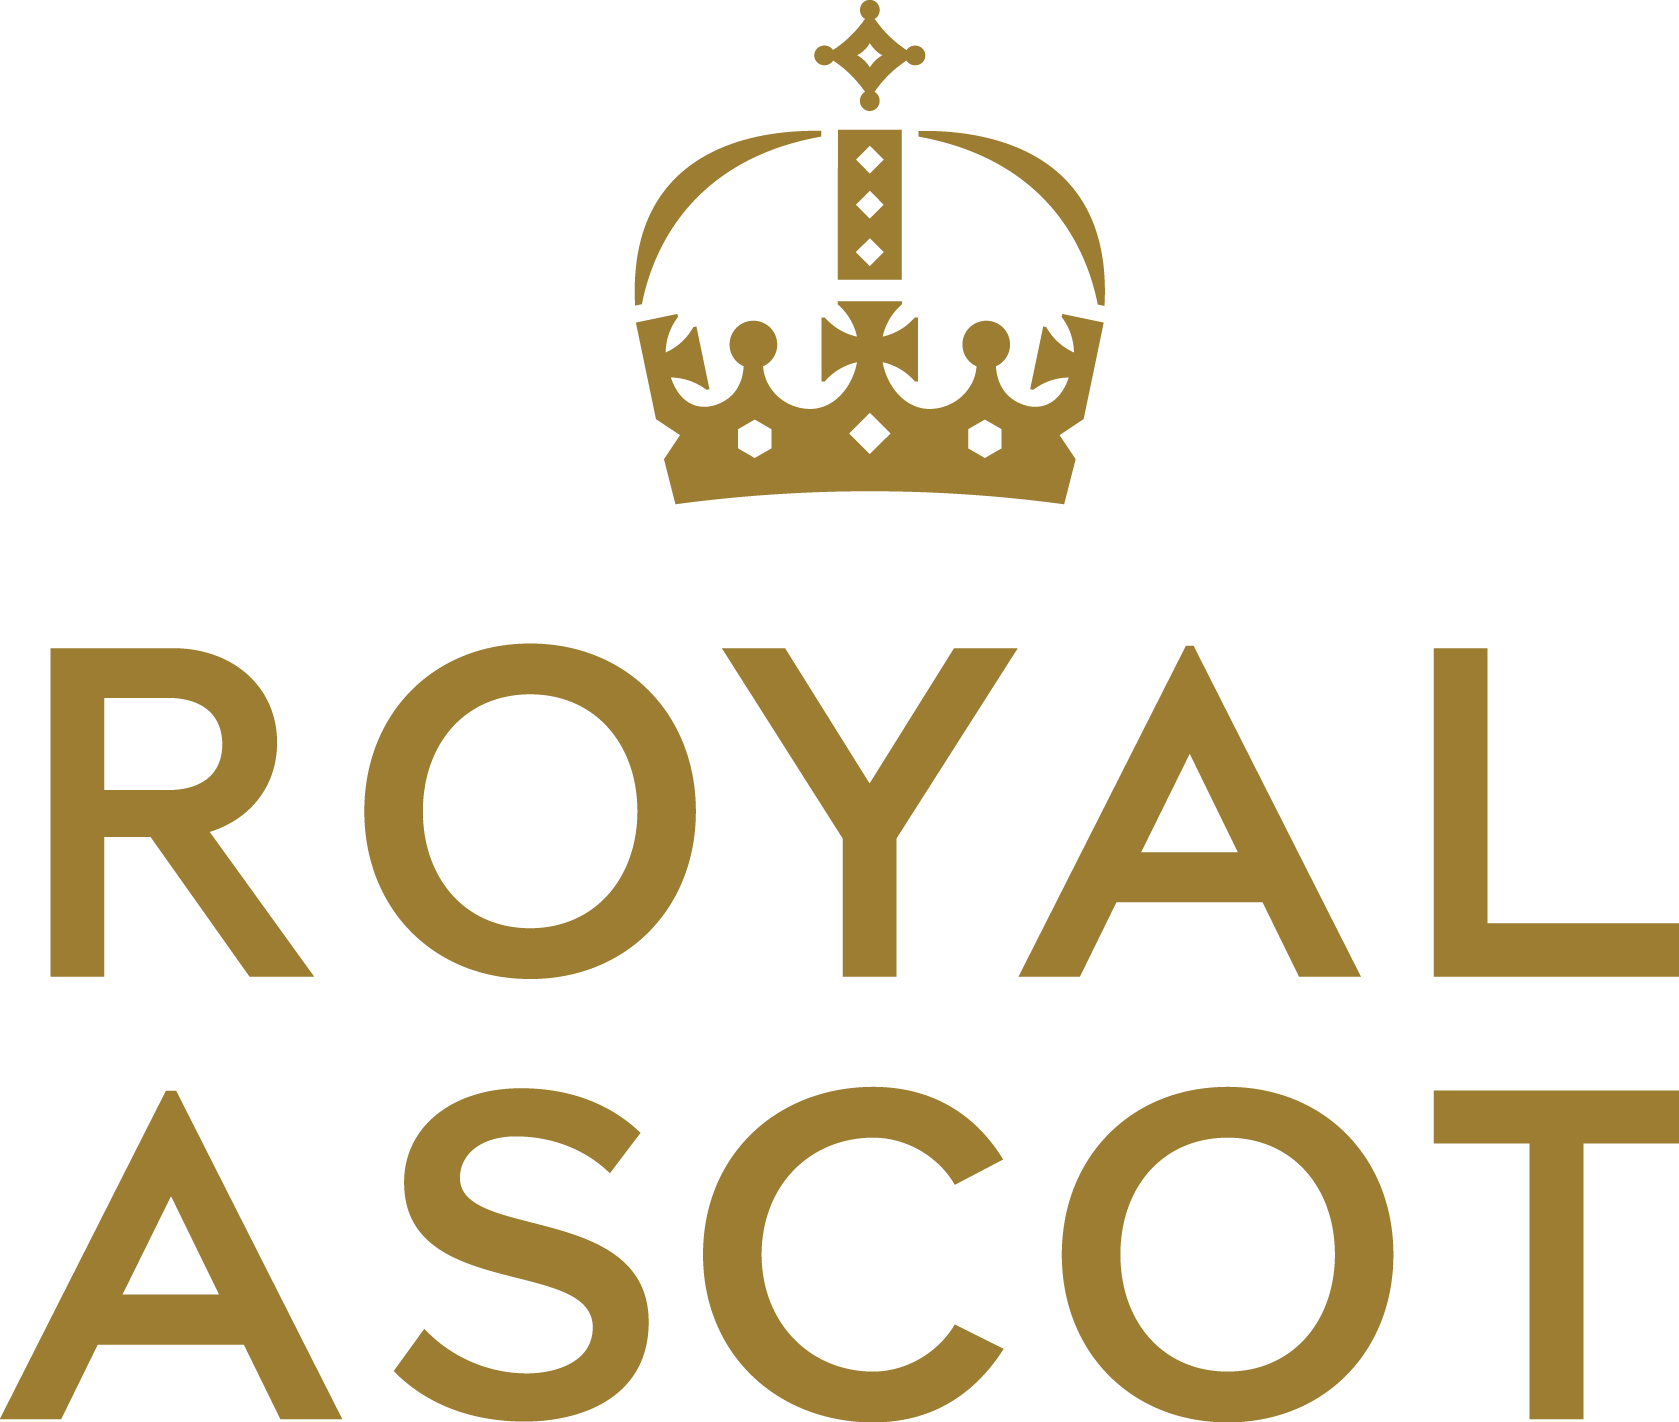 Royal Ascot logo.png